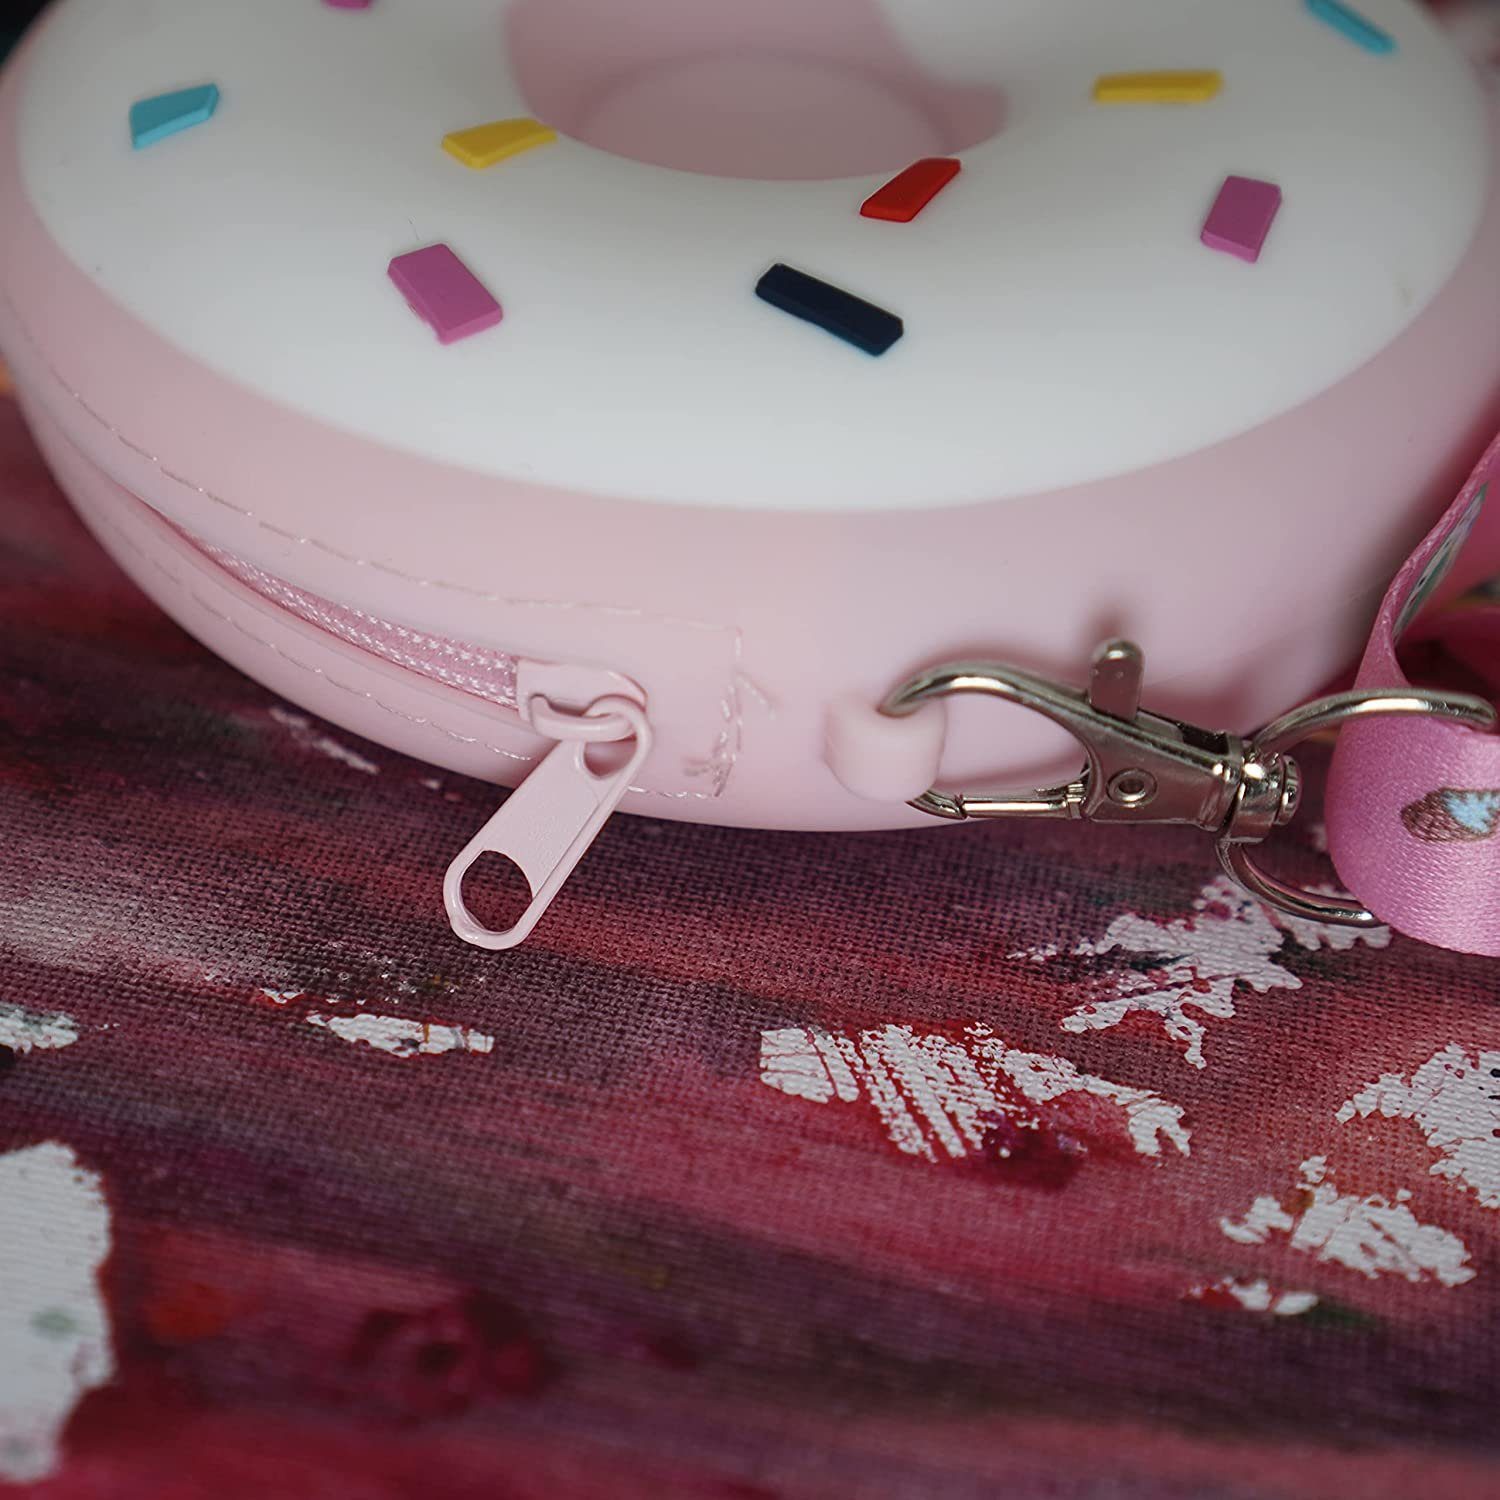 Kinder Accessoires Housruse Mini Bag Donut Ice Cream Fruit Bags für Kleinkinder von Kidbag, Holidays to Hang, Neck Pouch Silicon